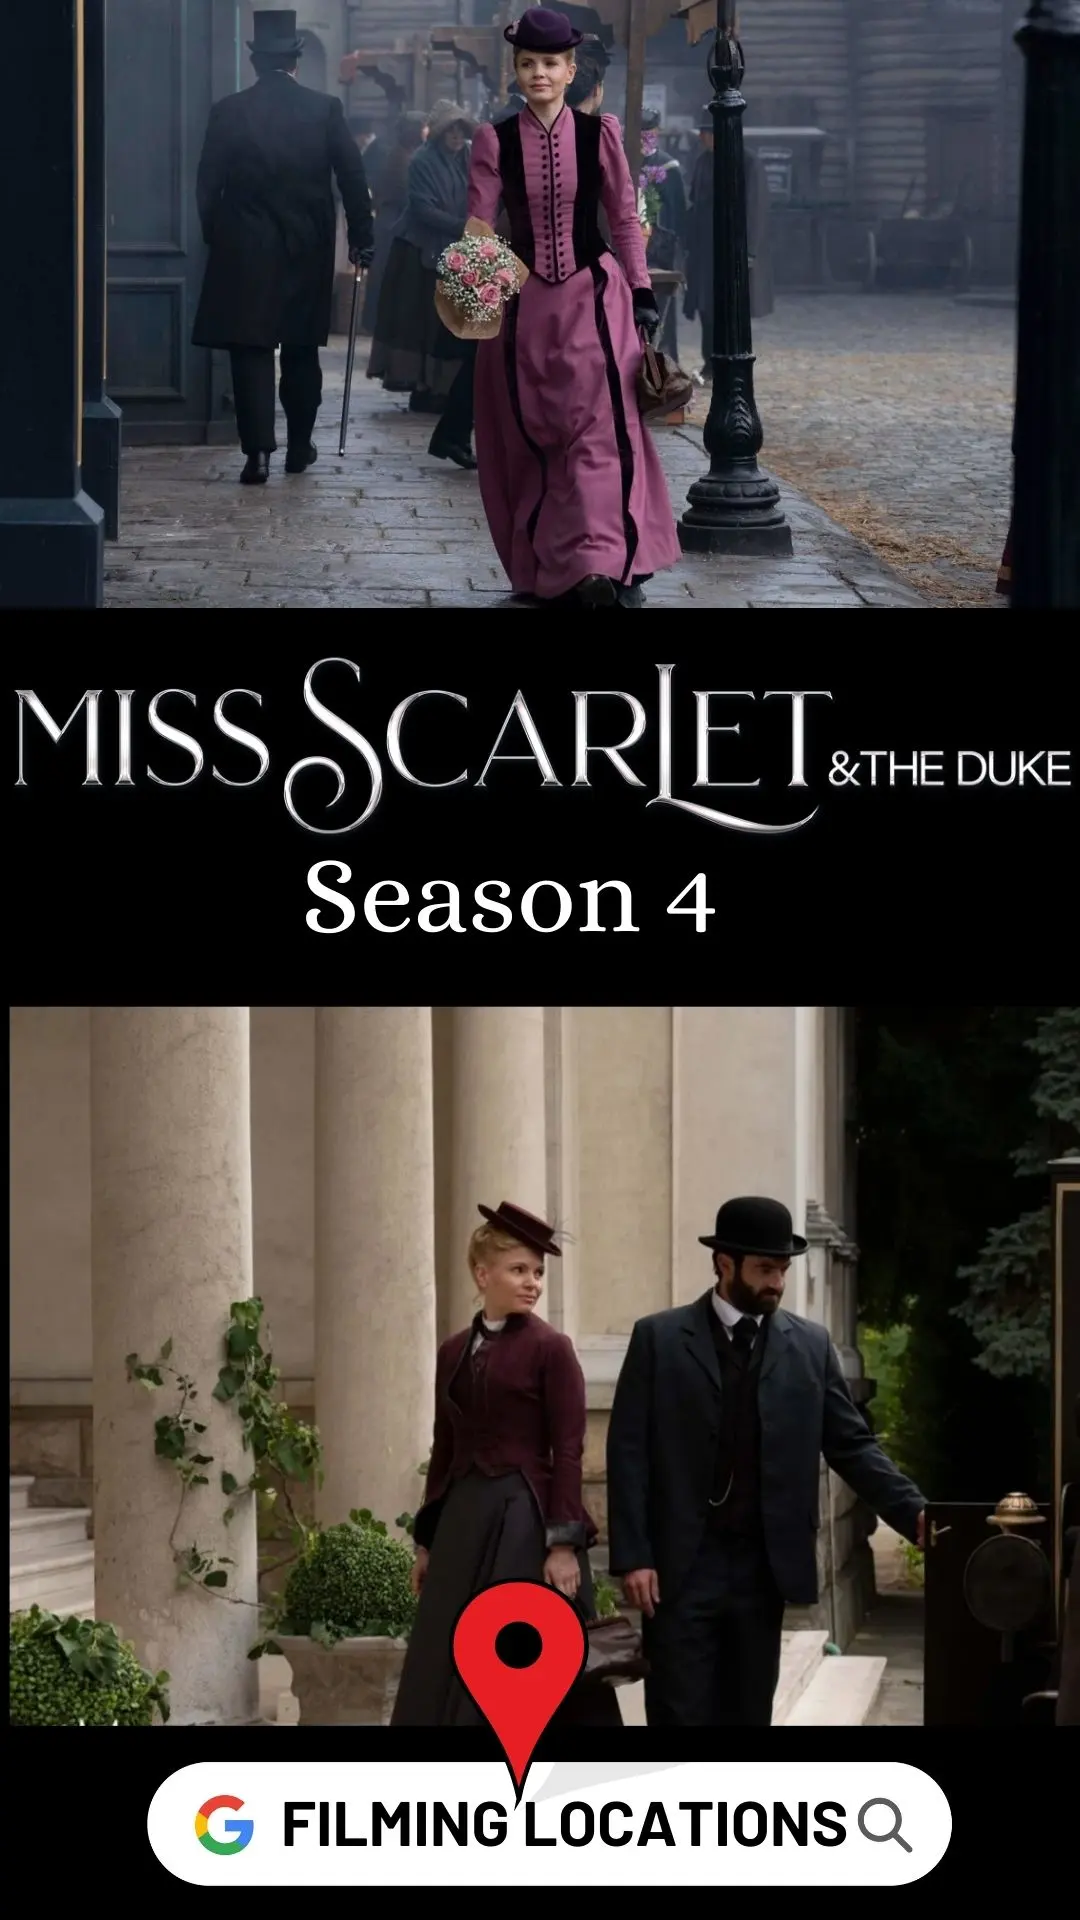 Miss Scarlet & the Duke Season 4 Filming Locations